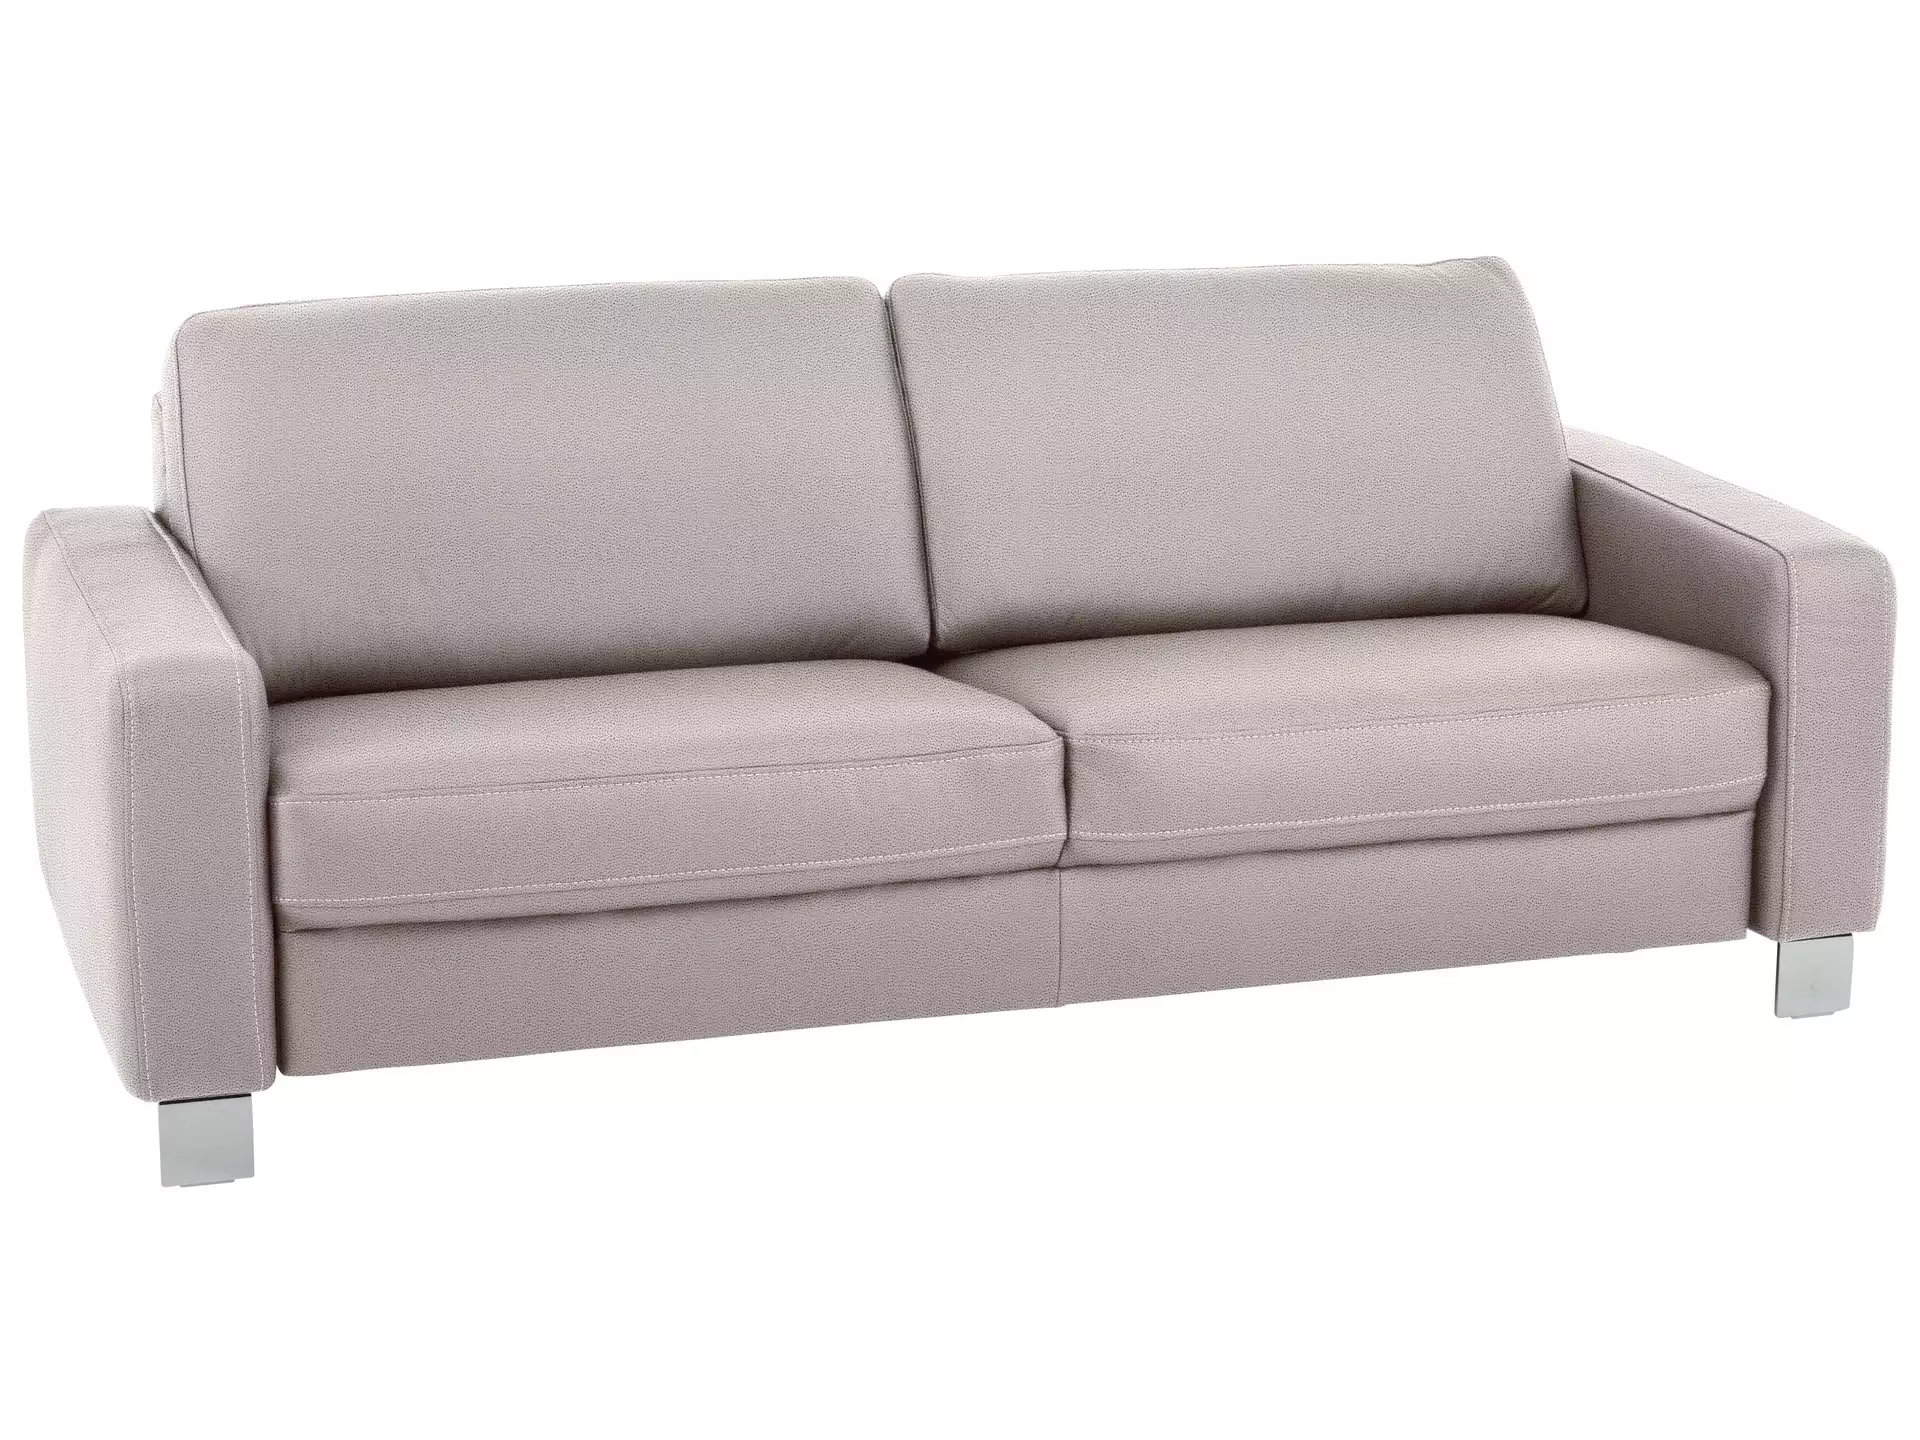 Sofa Shetland Basic B: 214 cm Polipol / Farbe: Silver / Material: Microfaser Basic